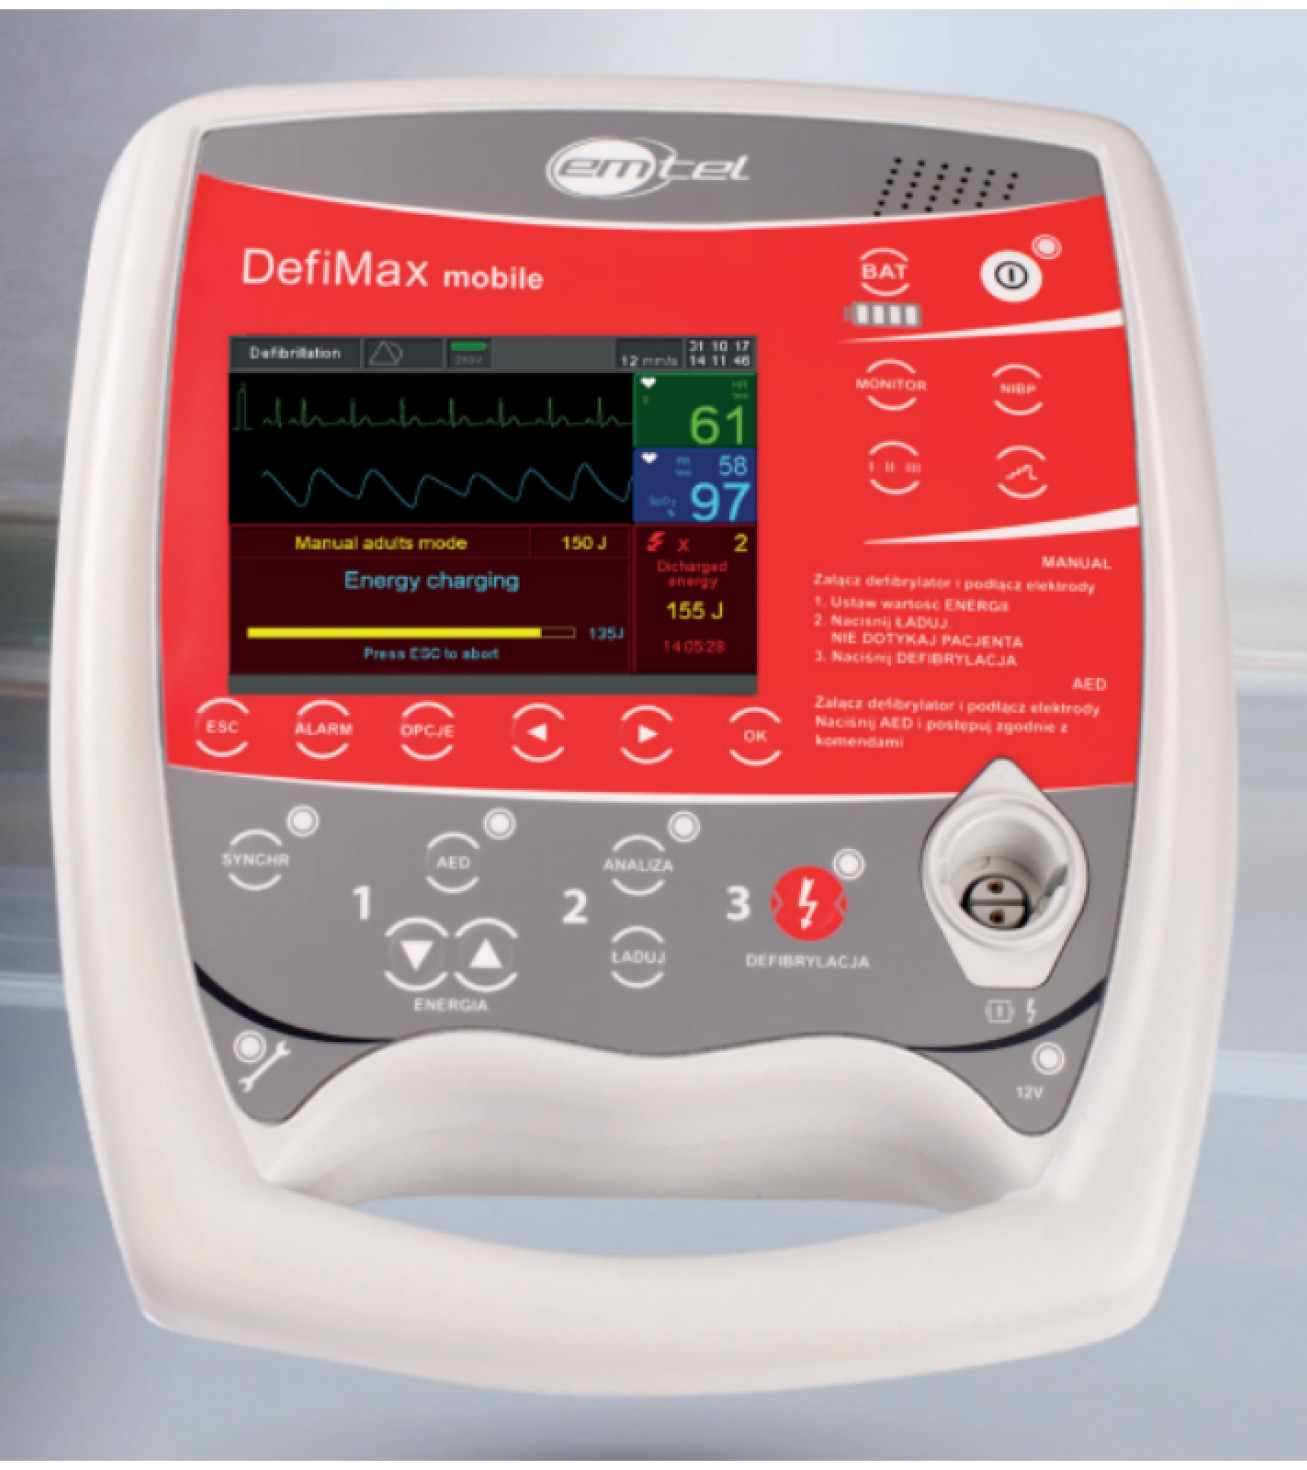 Portable defibrillator DefiMax mobile